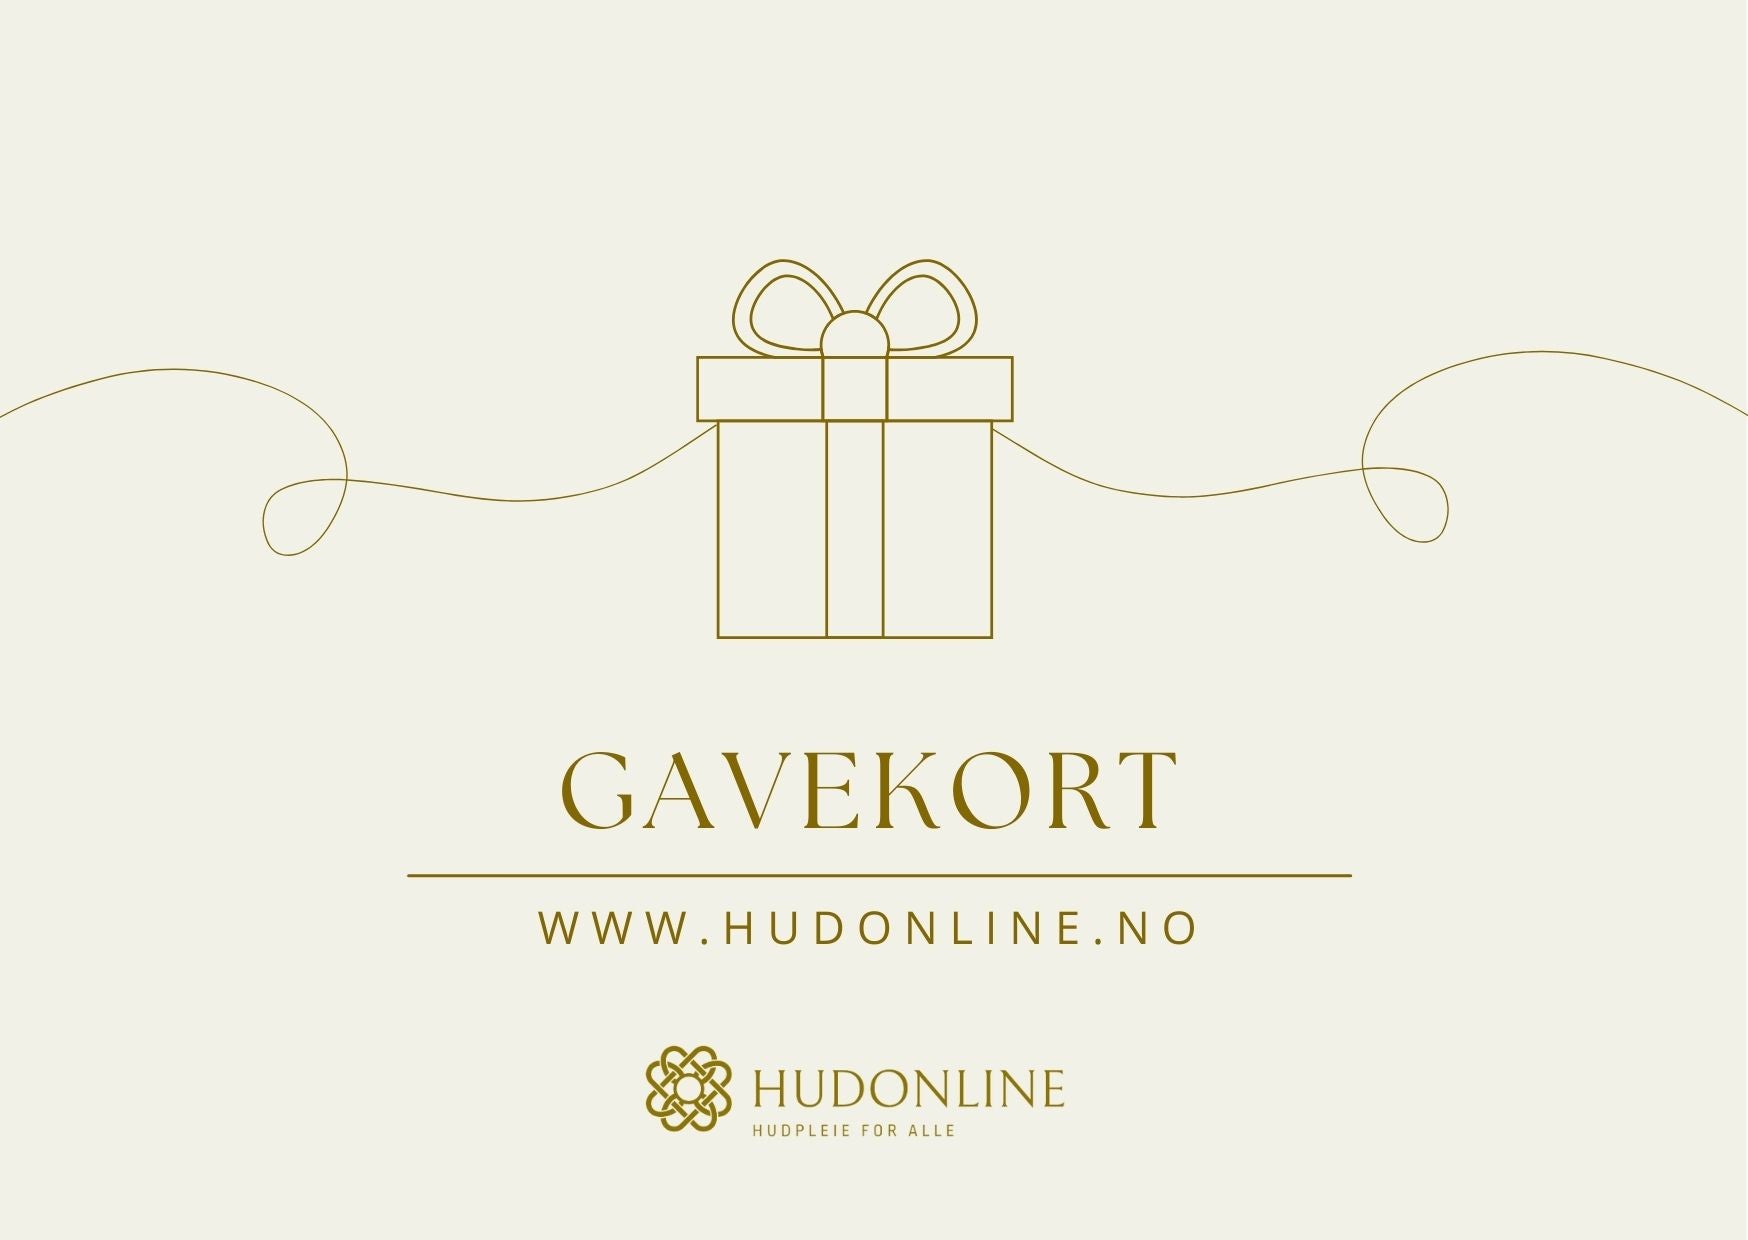 Gavekort - www.Hudonline.no 